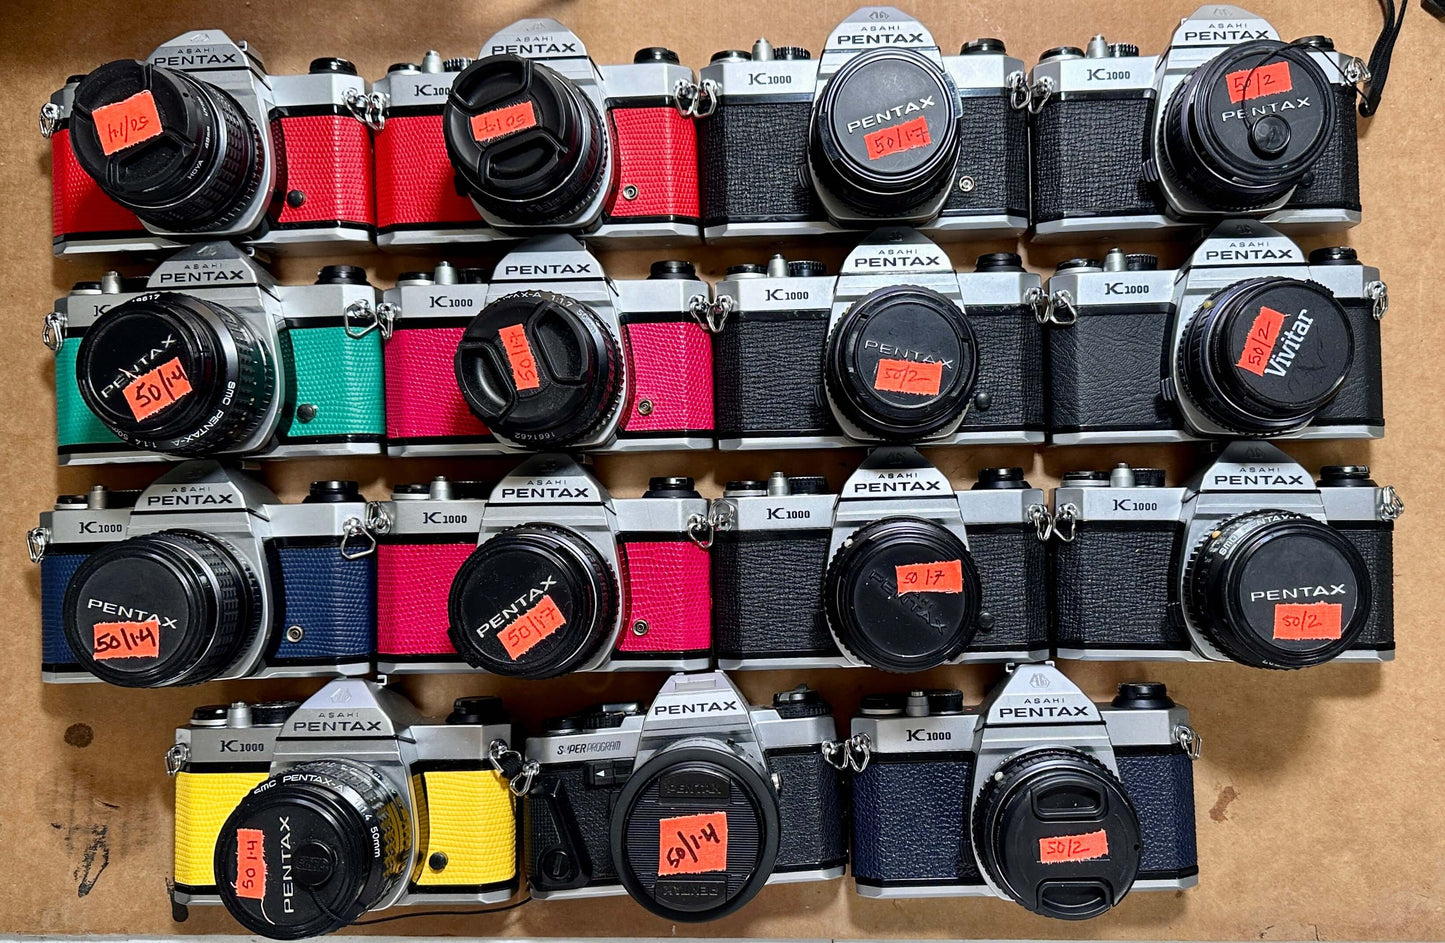 Asahi Pentax K1000 CLAd 30-day Warranty Used 35mm Film Camera Black with Lens